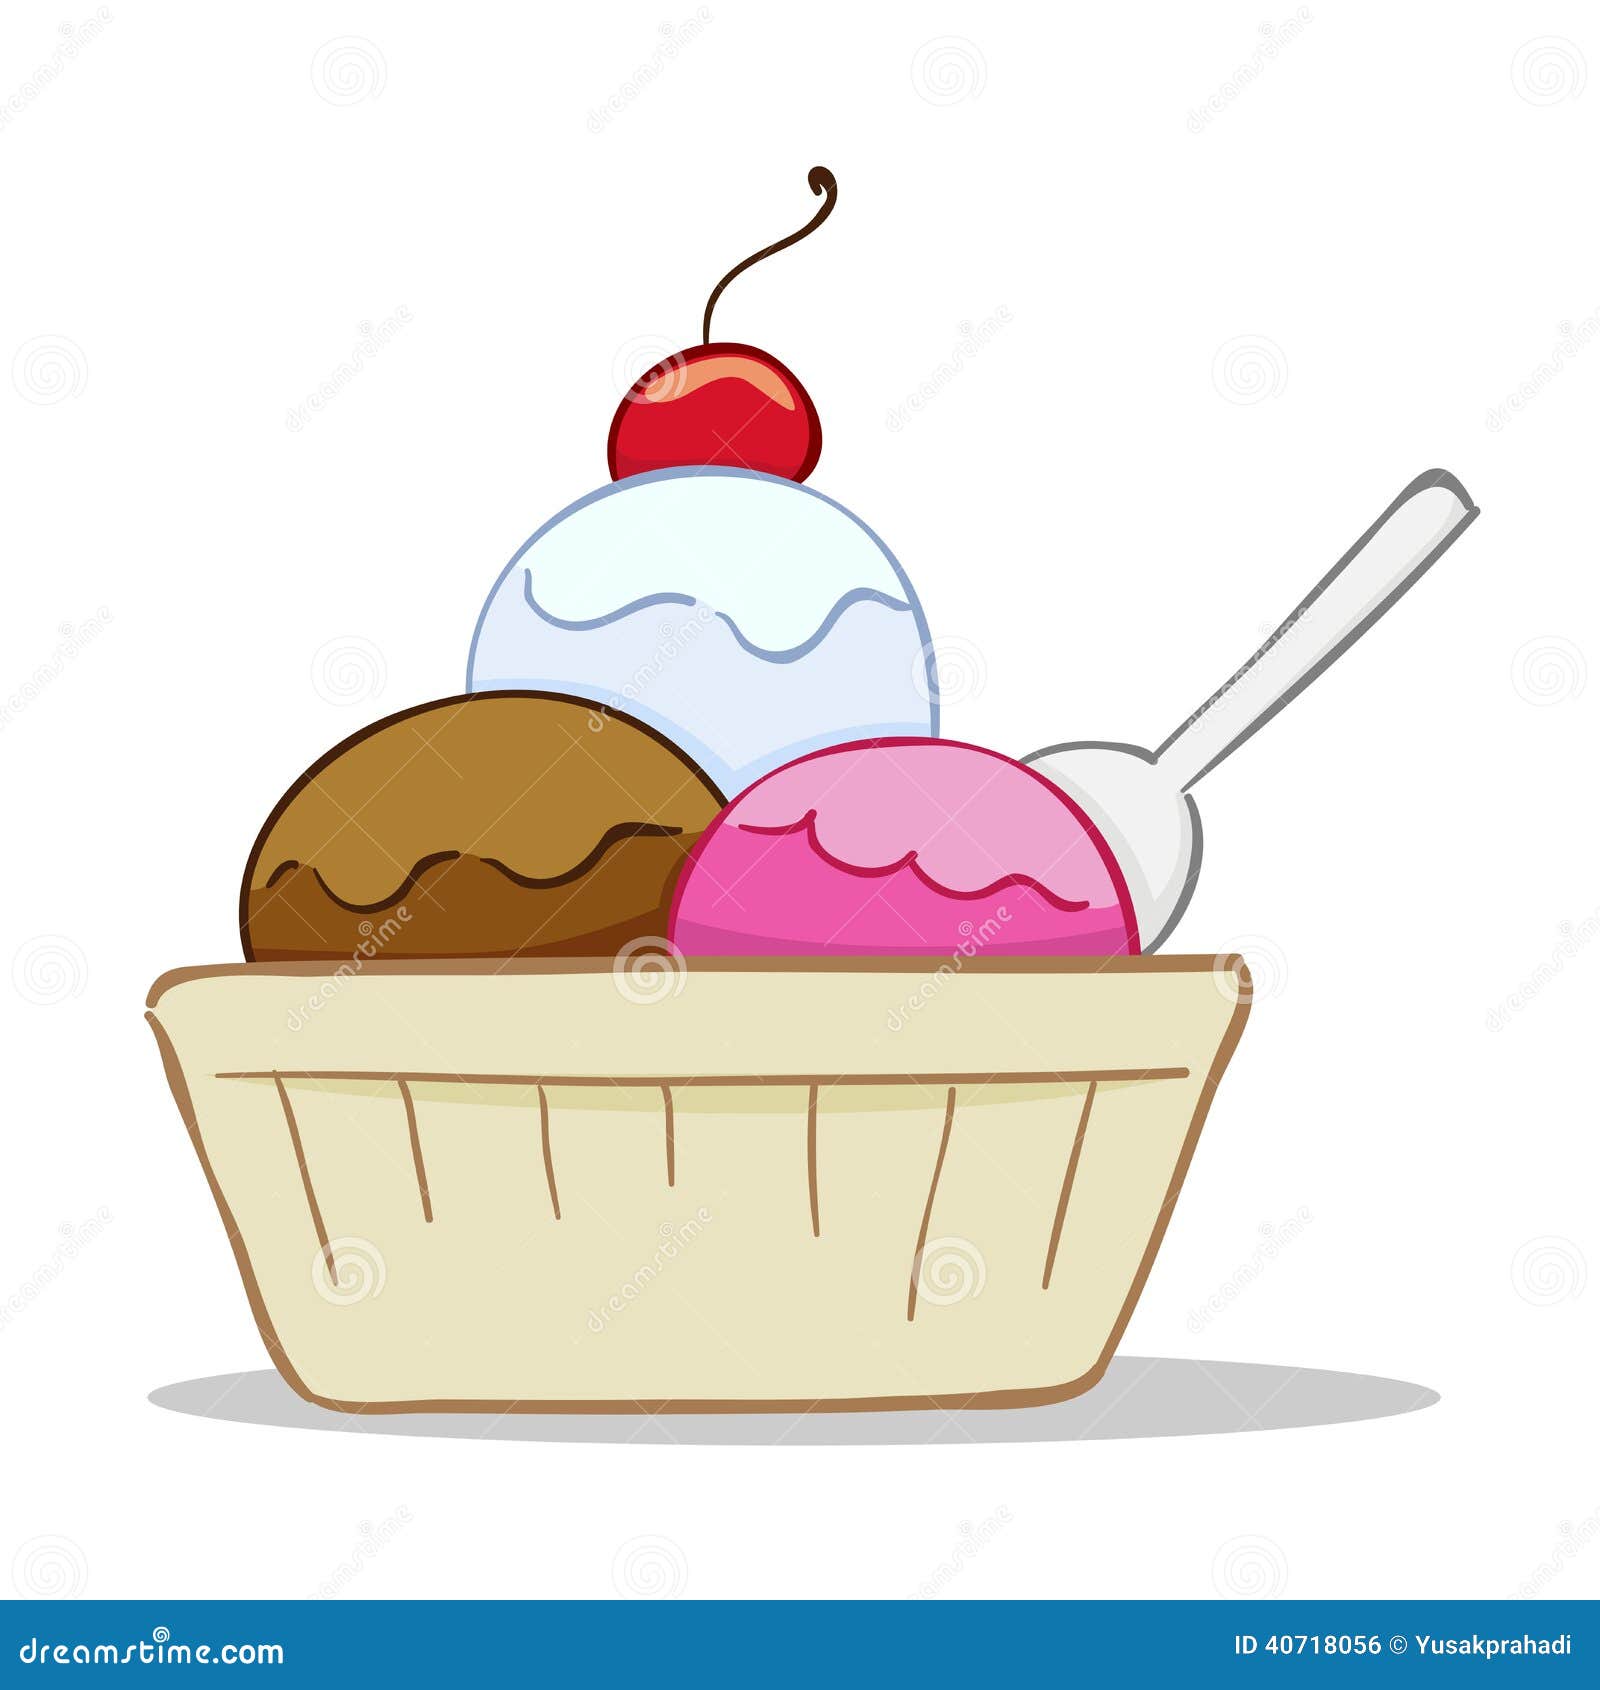 ice cream dish clip art - photo #11